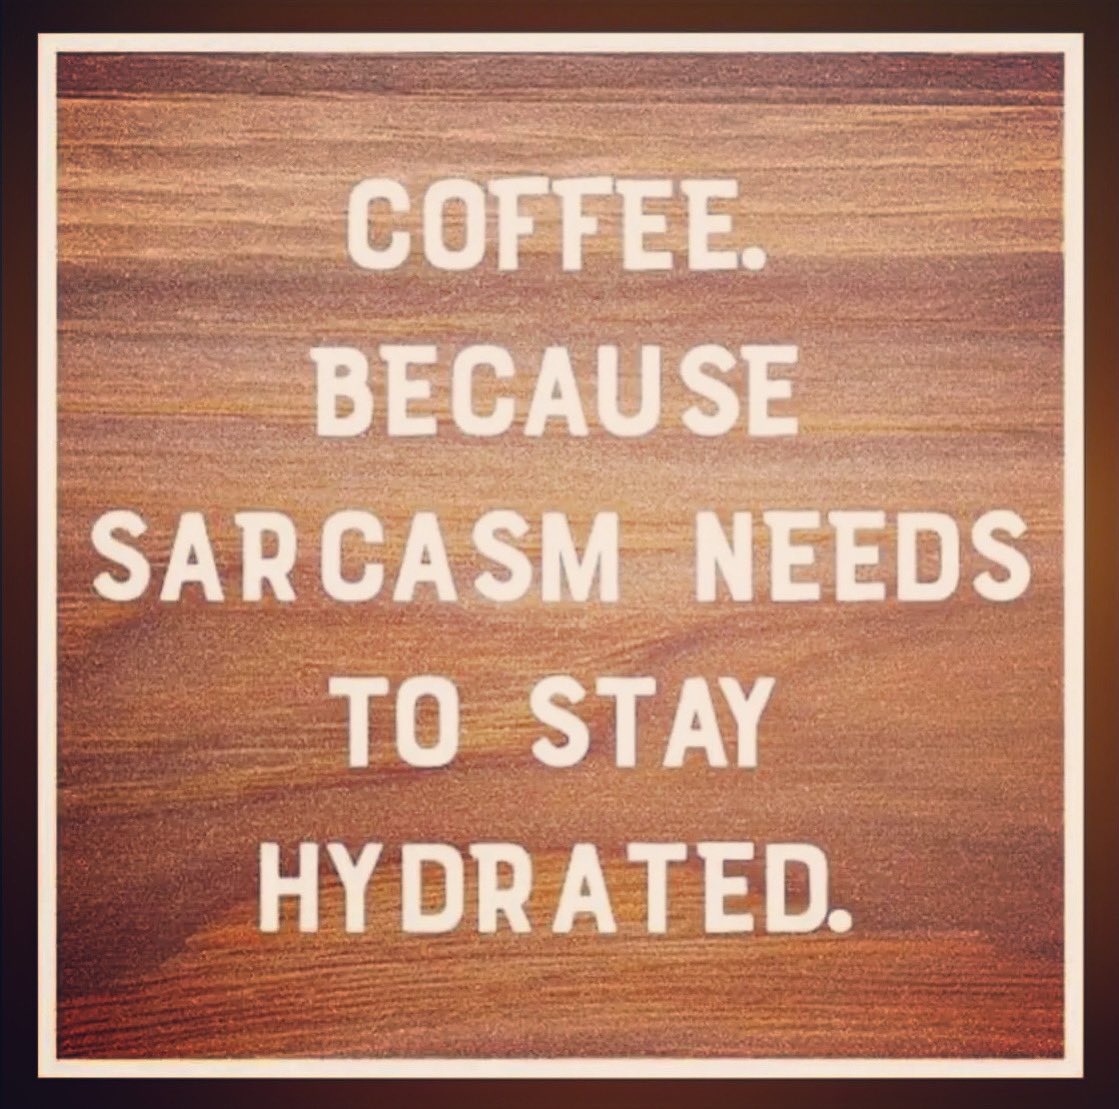 Drink up! ☕☕☕☕
#coffeelover #staycaffeinated #mustlovecoffee